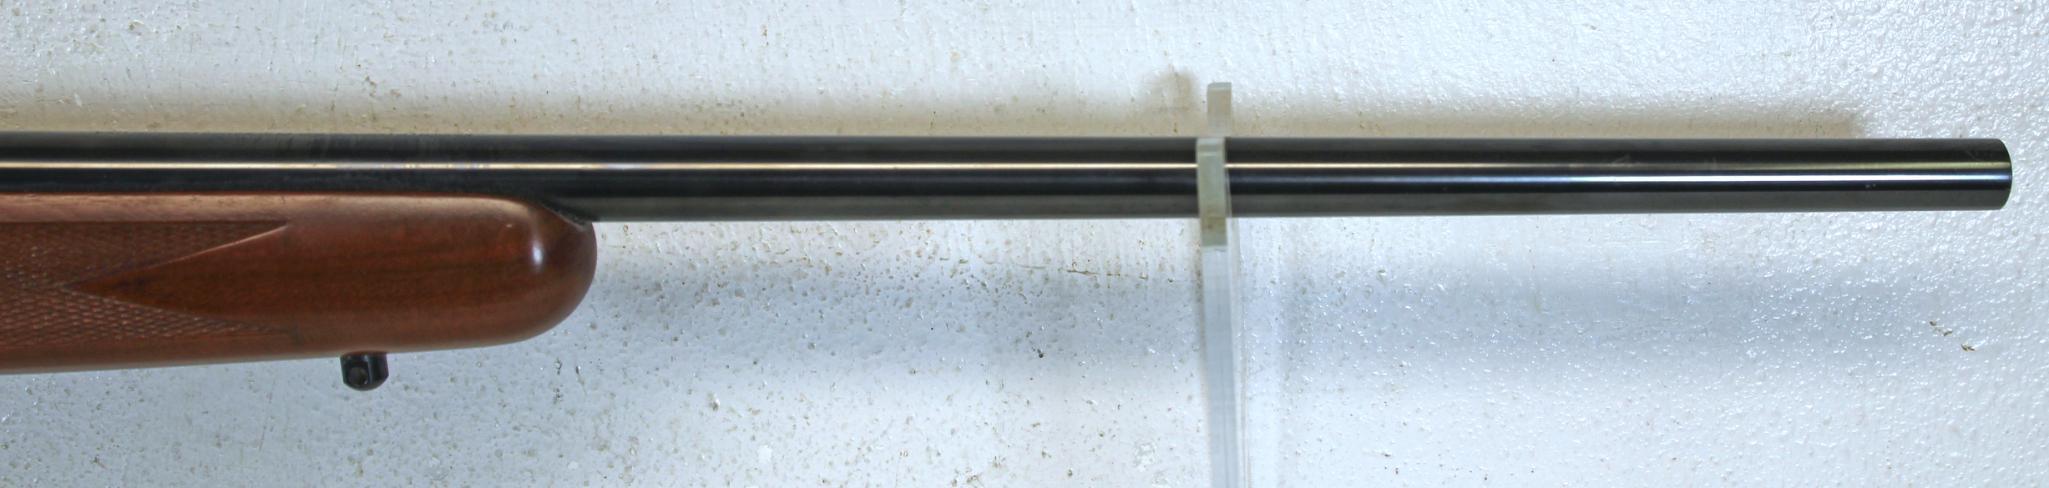 Kimber Model 82 .22 LR Clip Fed Bolt Action Rifle Made in Clackamas, Oregon... SN#RMF 7941...